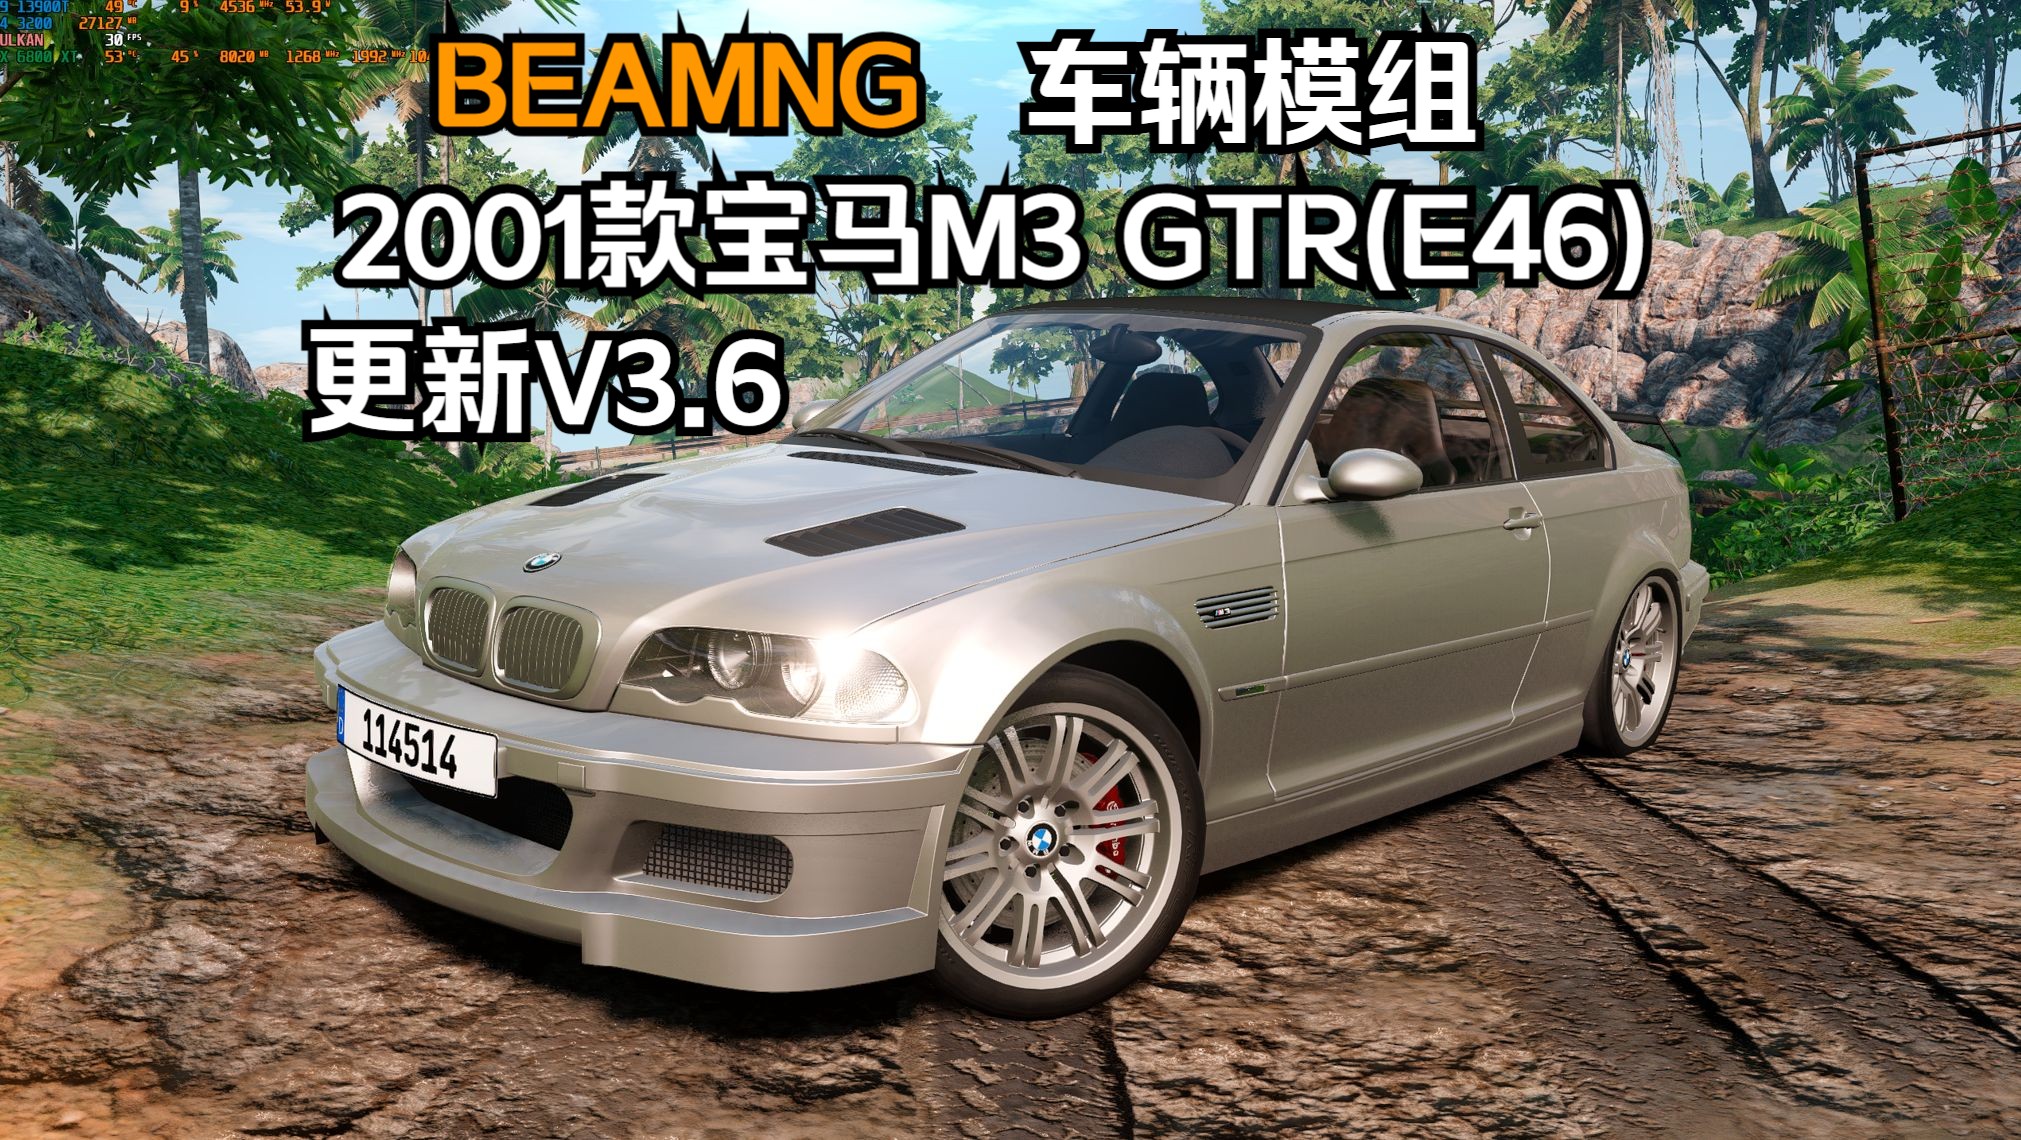 BEAMNG车辆模组-2001款宝马M3 GTR(E46) 更新V3.6 作者:S91